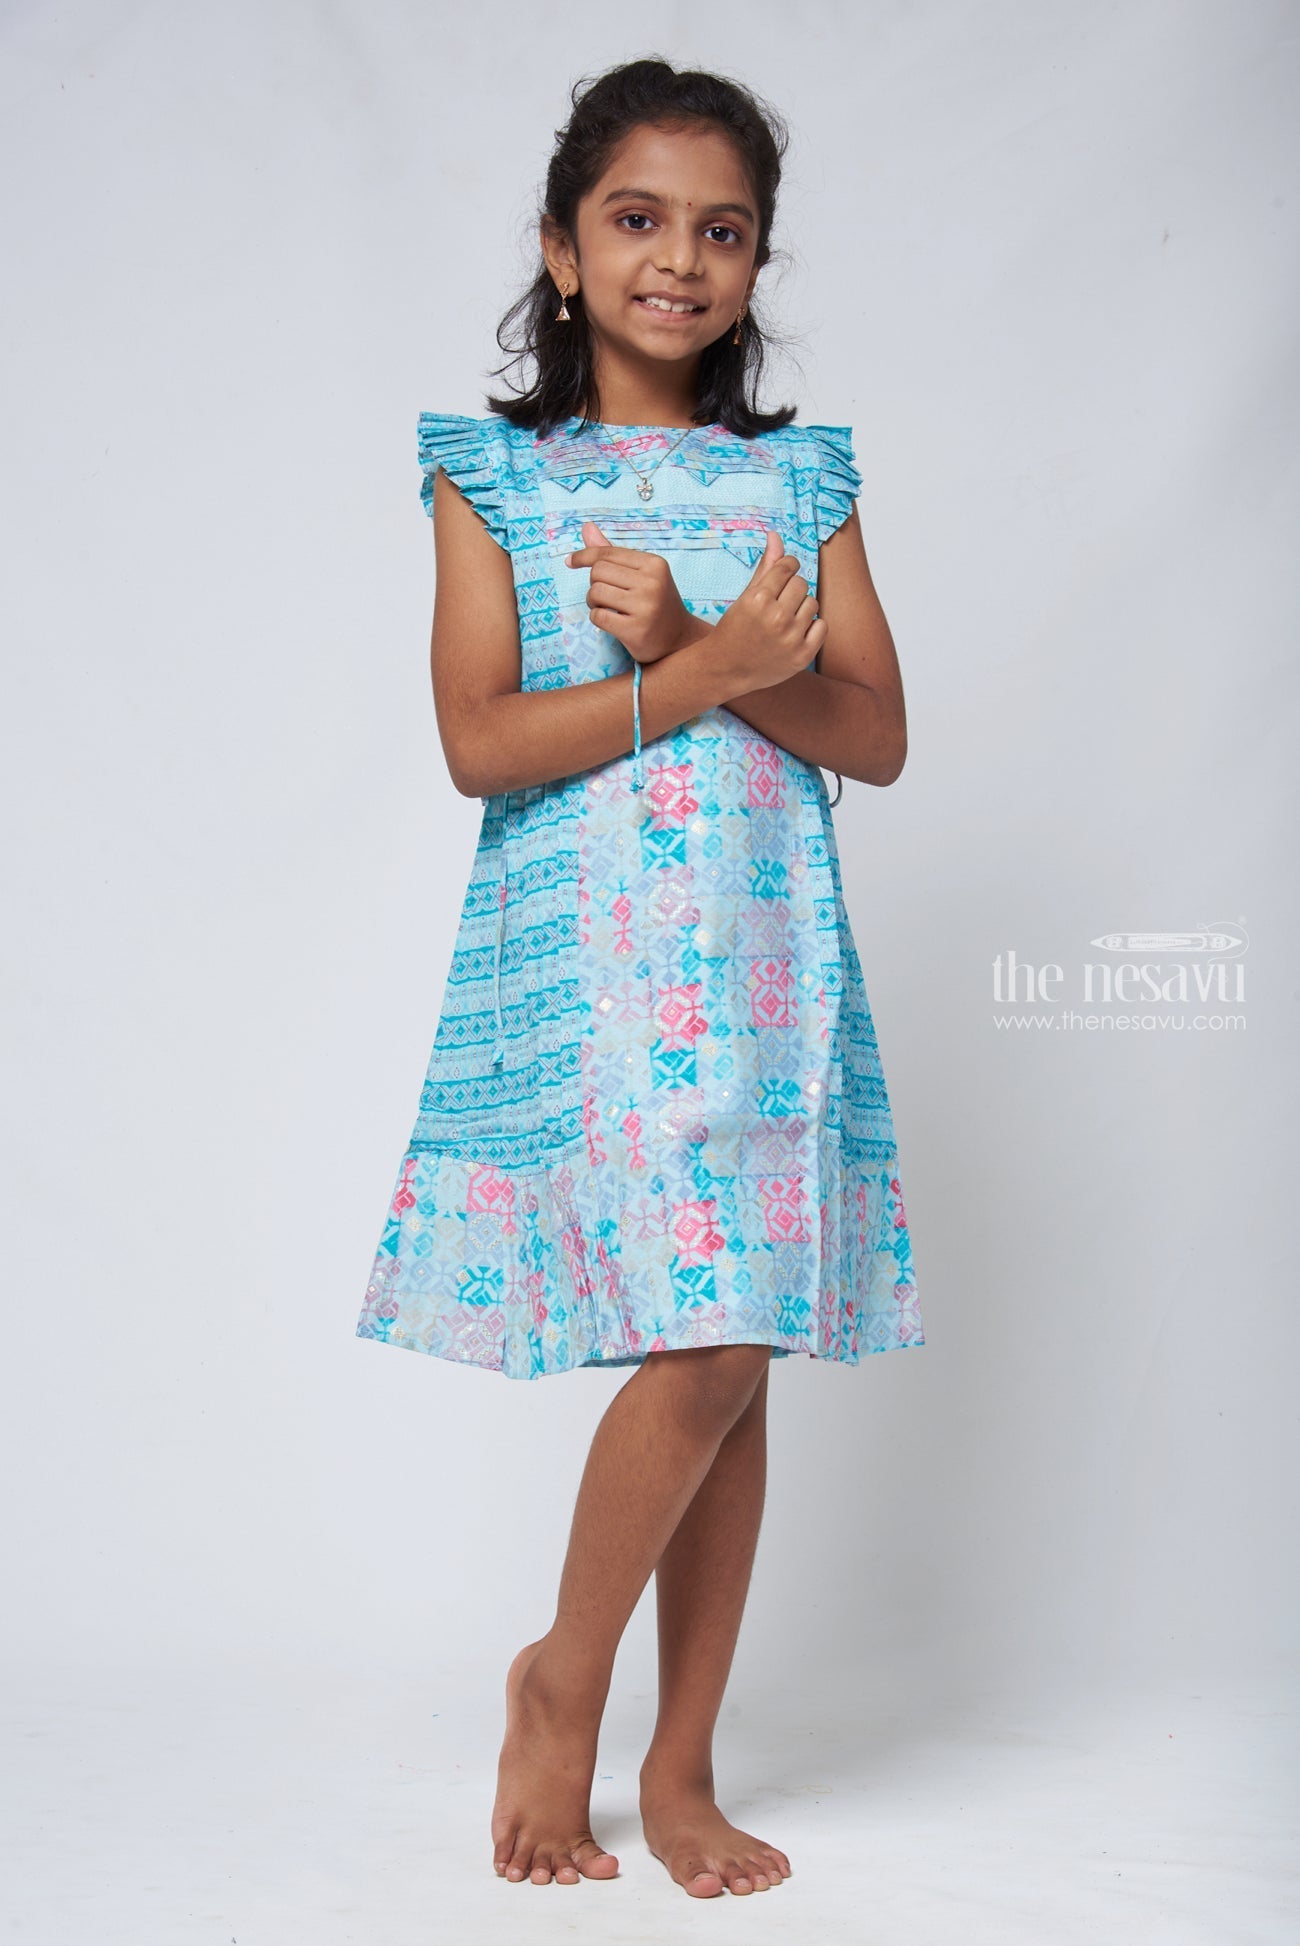 Simone Ashley Girl Model Is Wearing White Dress HD Girls Wallpapers | HD  Wallpapers | ID #104987